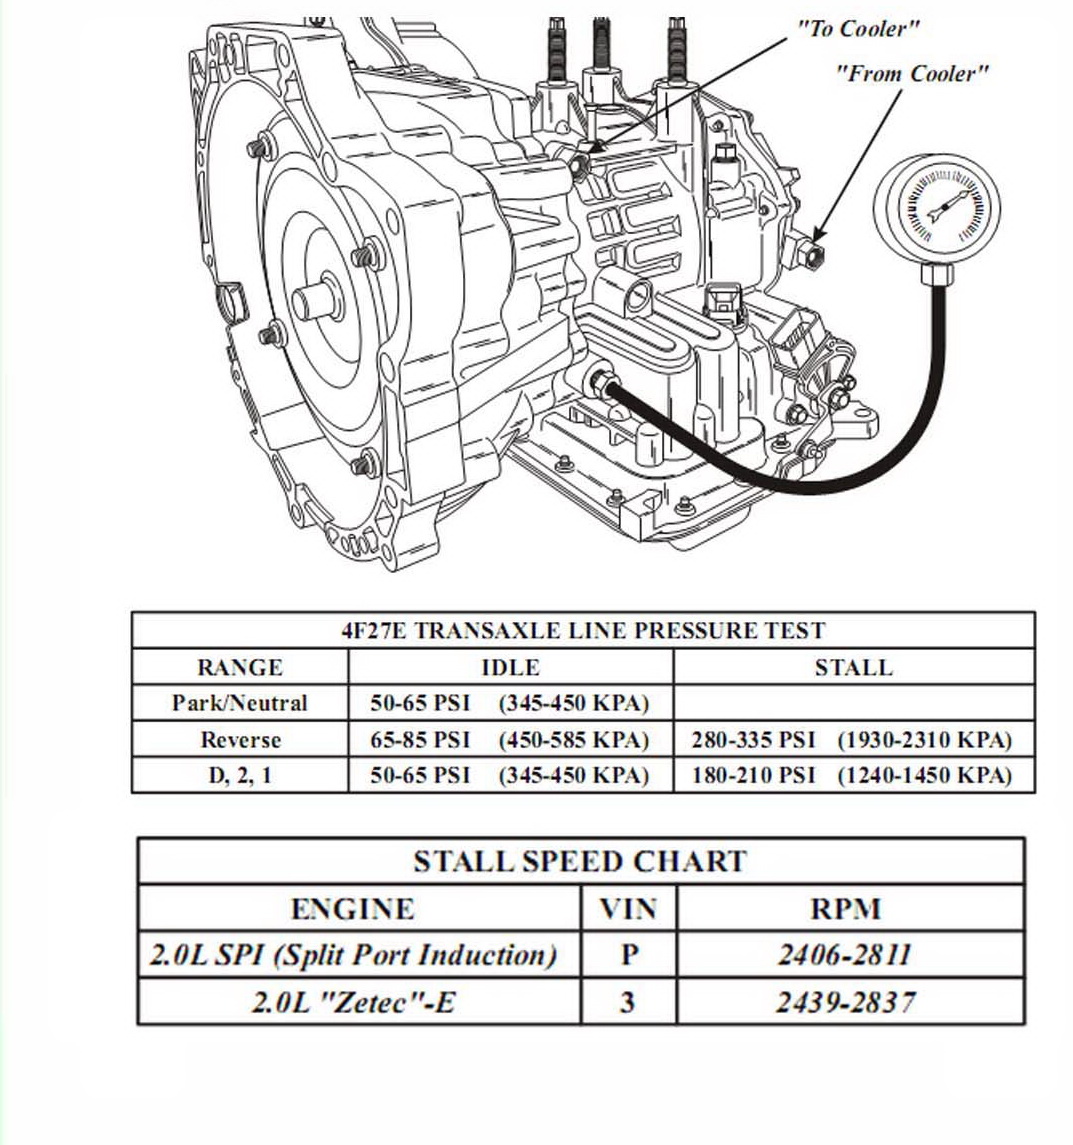 Transmission repair manuals 4F27E | Instructions for rebuild transmission